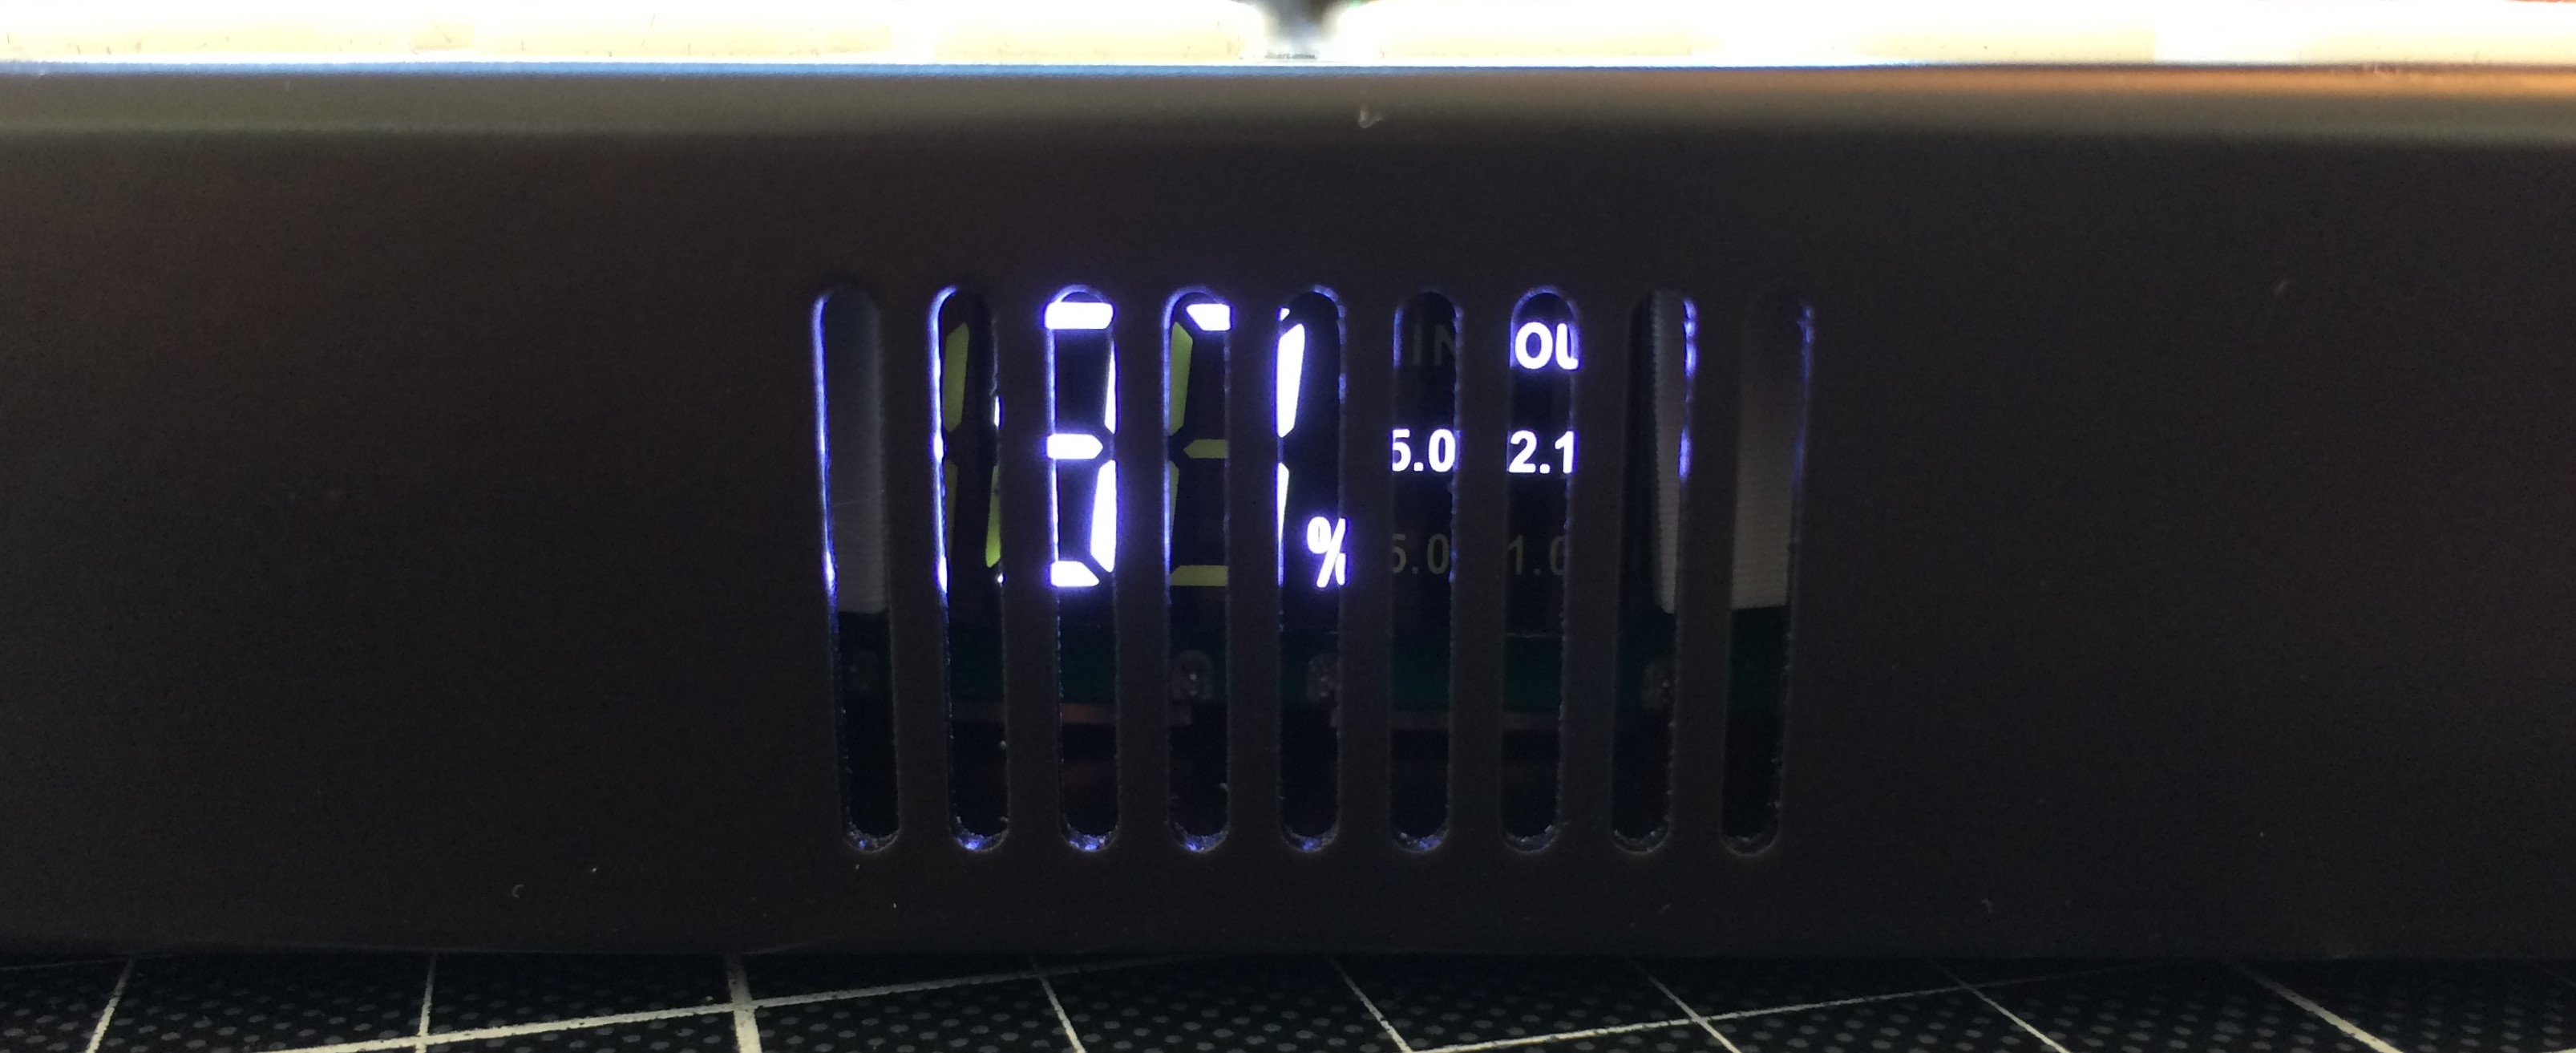 Battery indicator through speaker grill